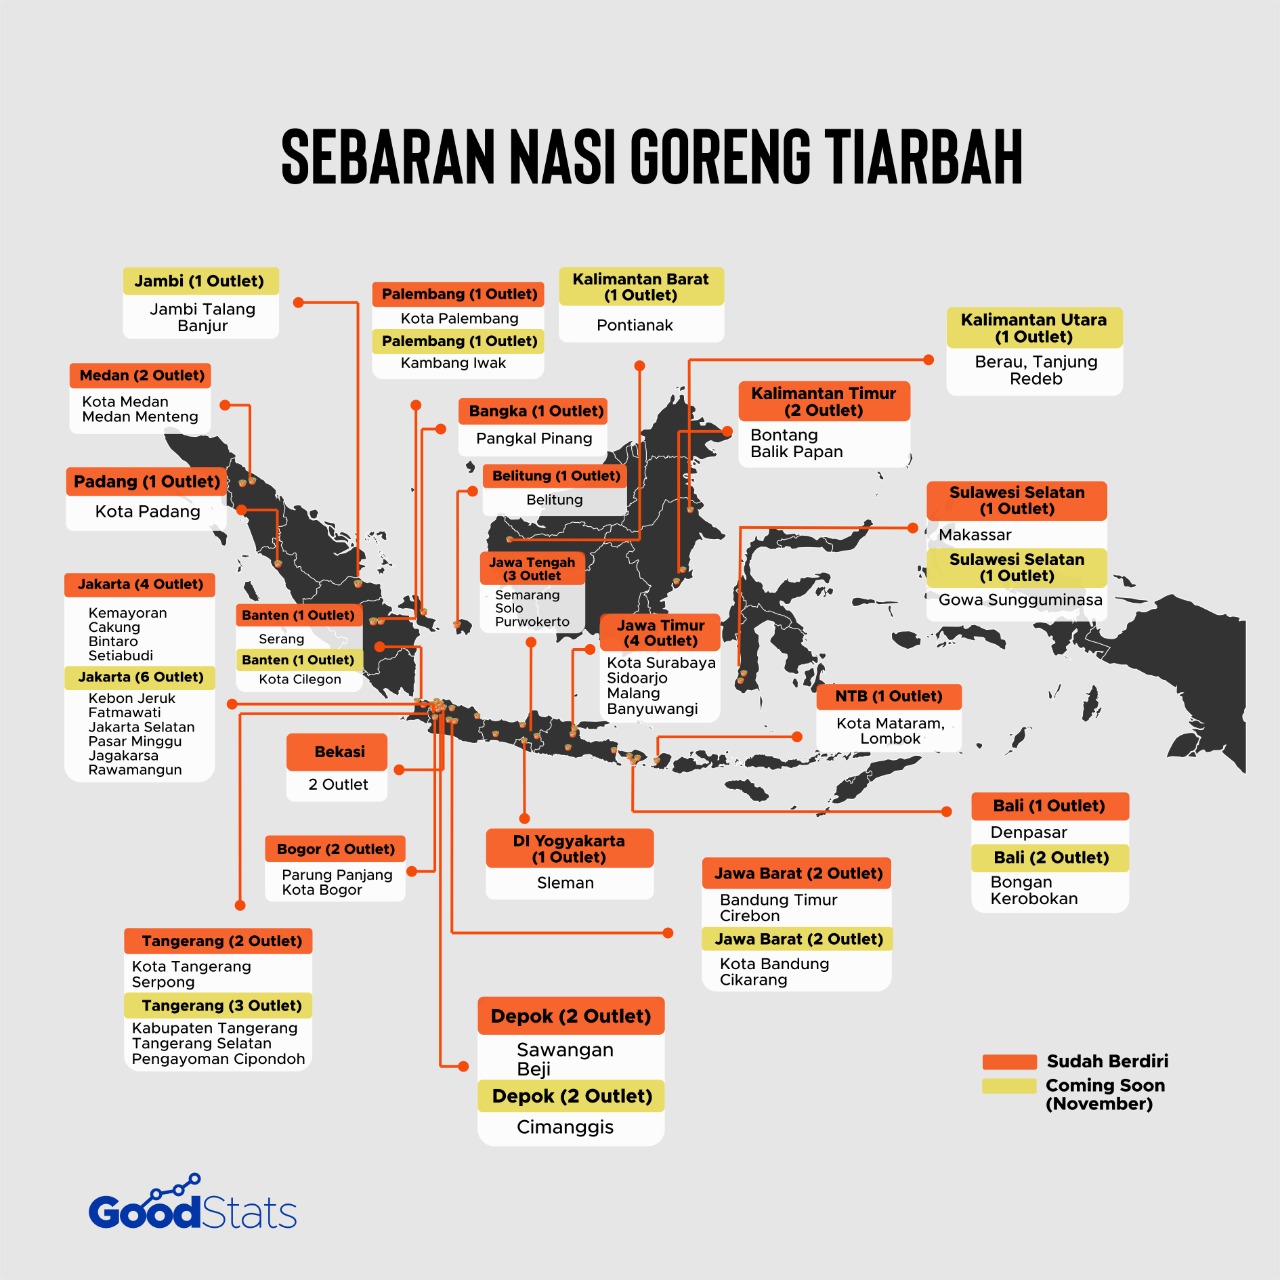 Sebaran Kemitraan Nasi Goreng Tiarbah. | Mapgrafik : GoodStats/Hannah